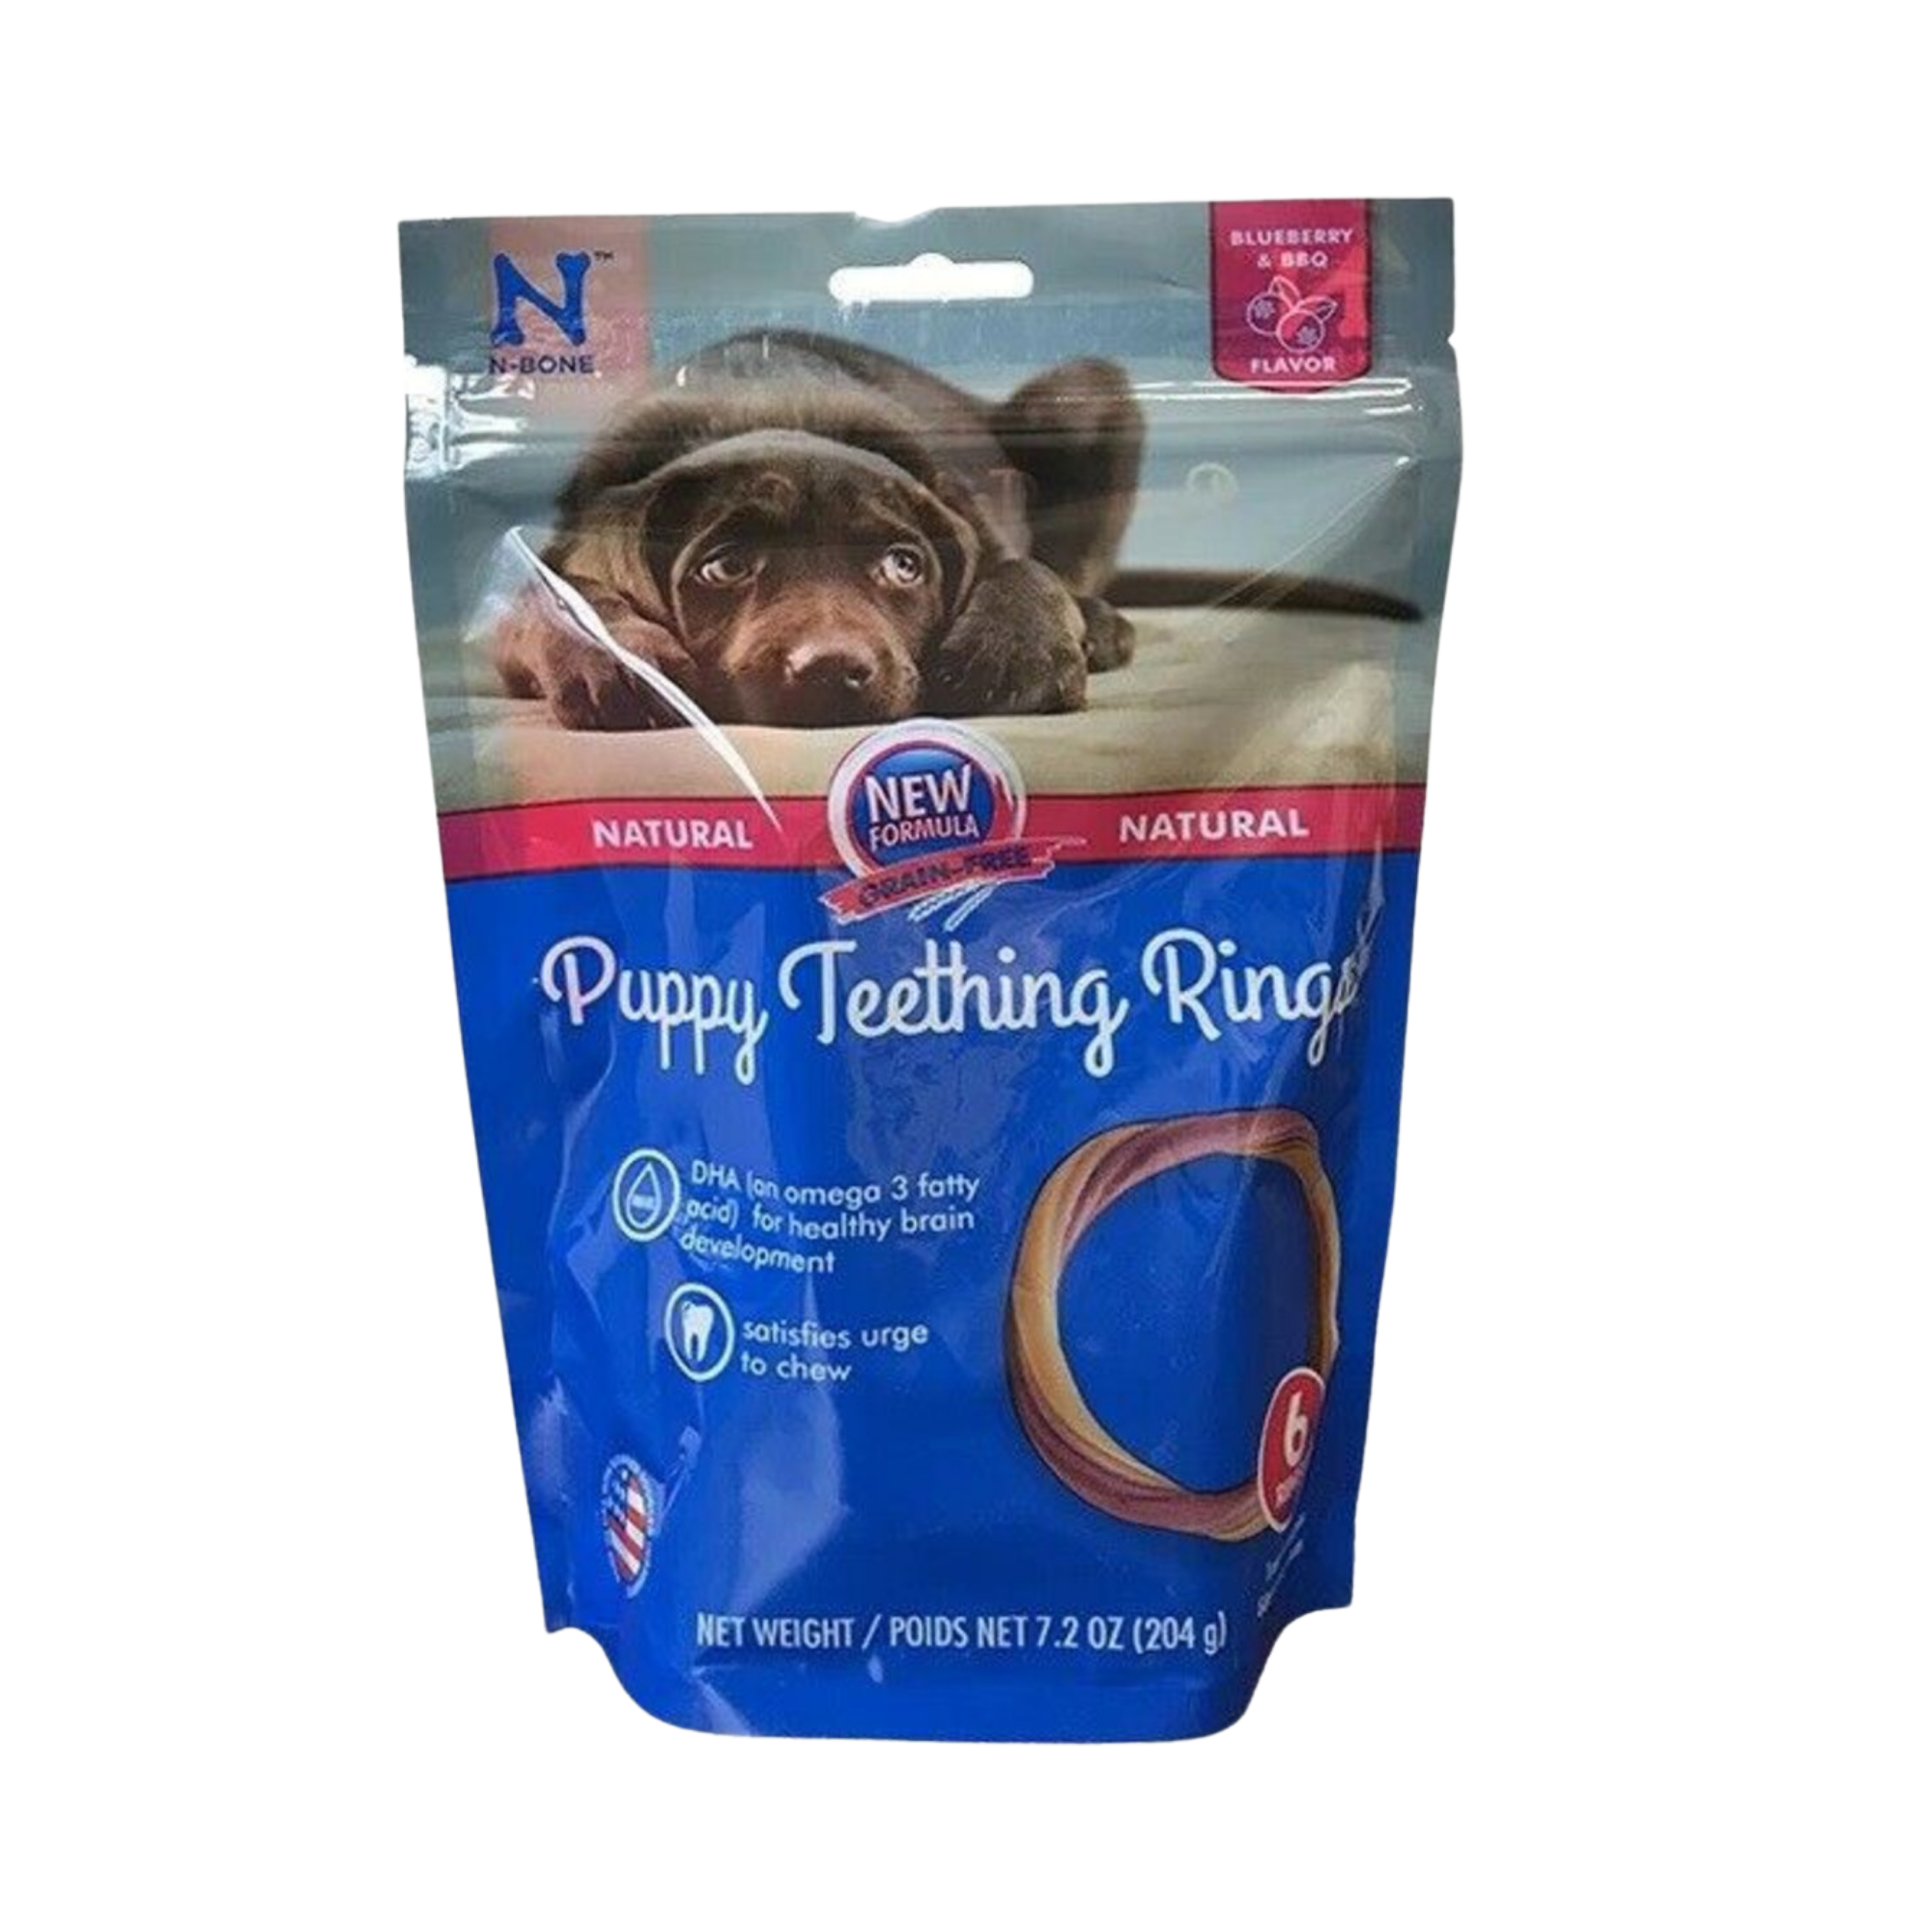 NPIC N-Bone Puppy Teething Ring Grain Free Blueberry/Bacon